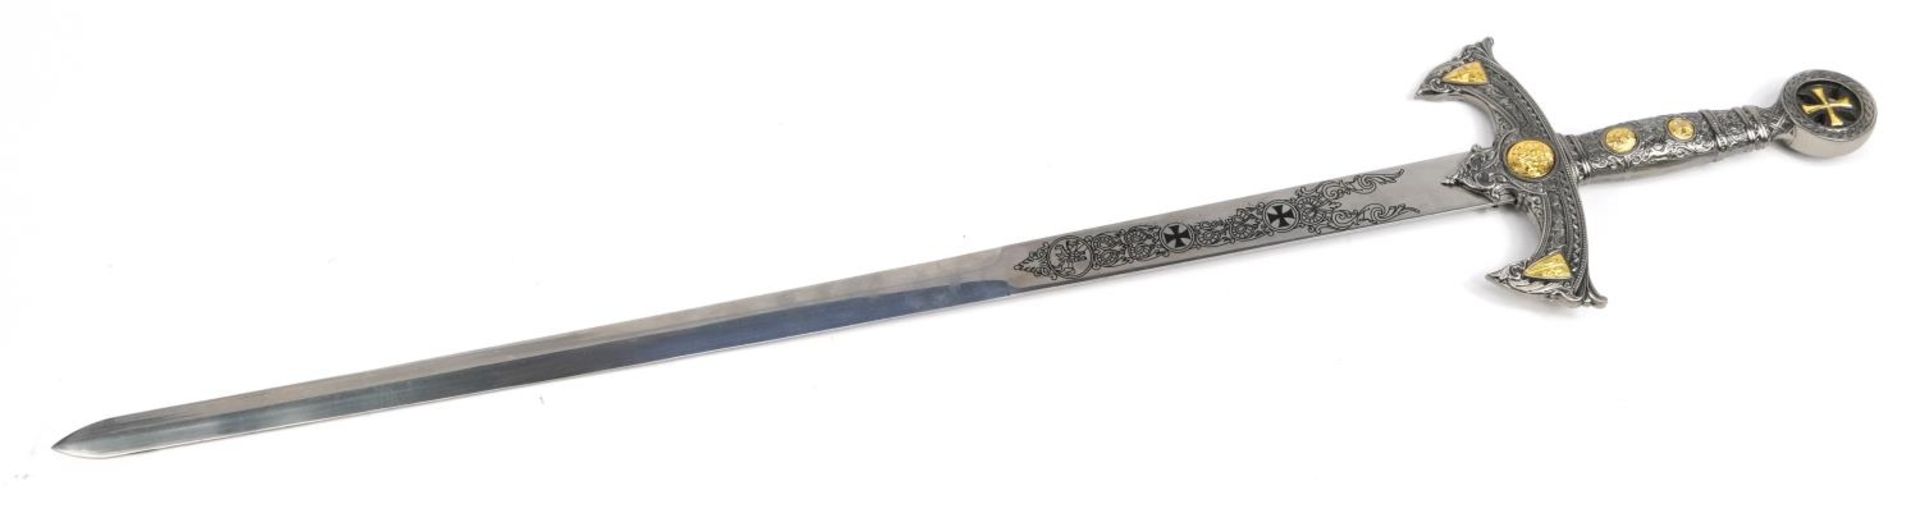 Large medieval design decorative sword, 120cm in length - Bild 2 aus 3